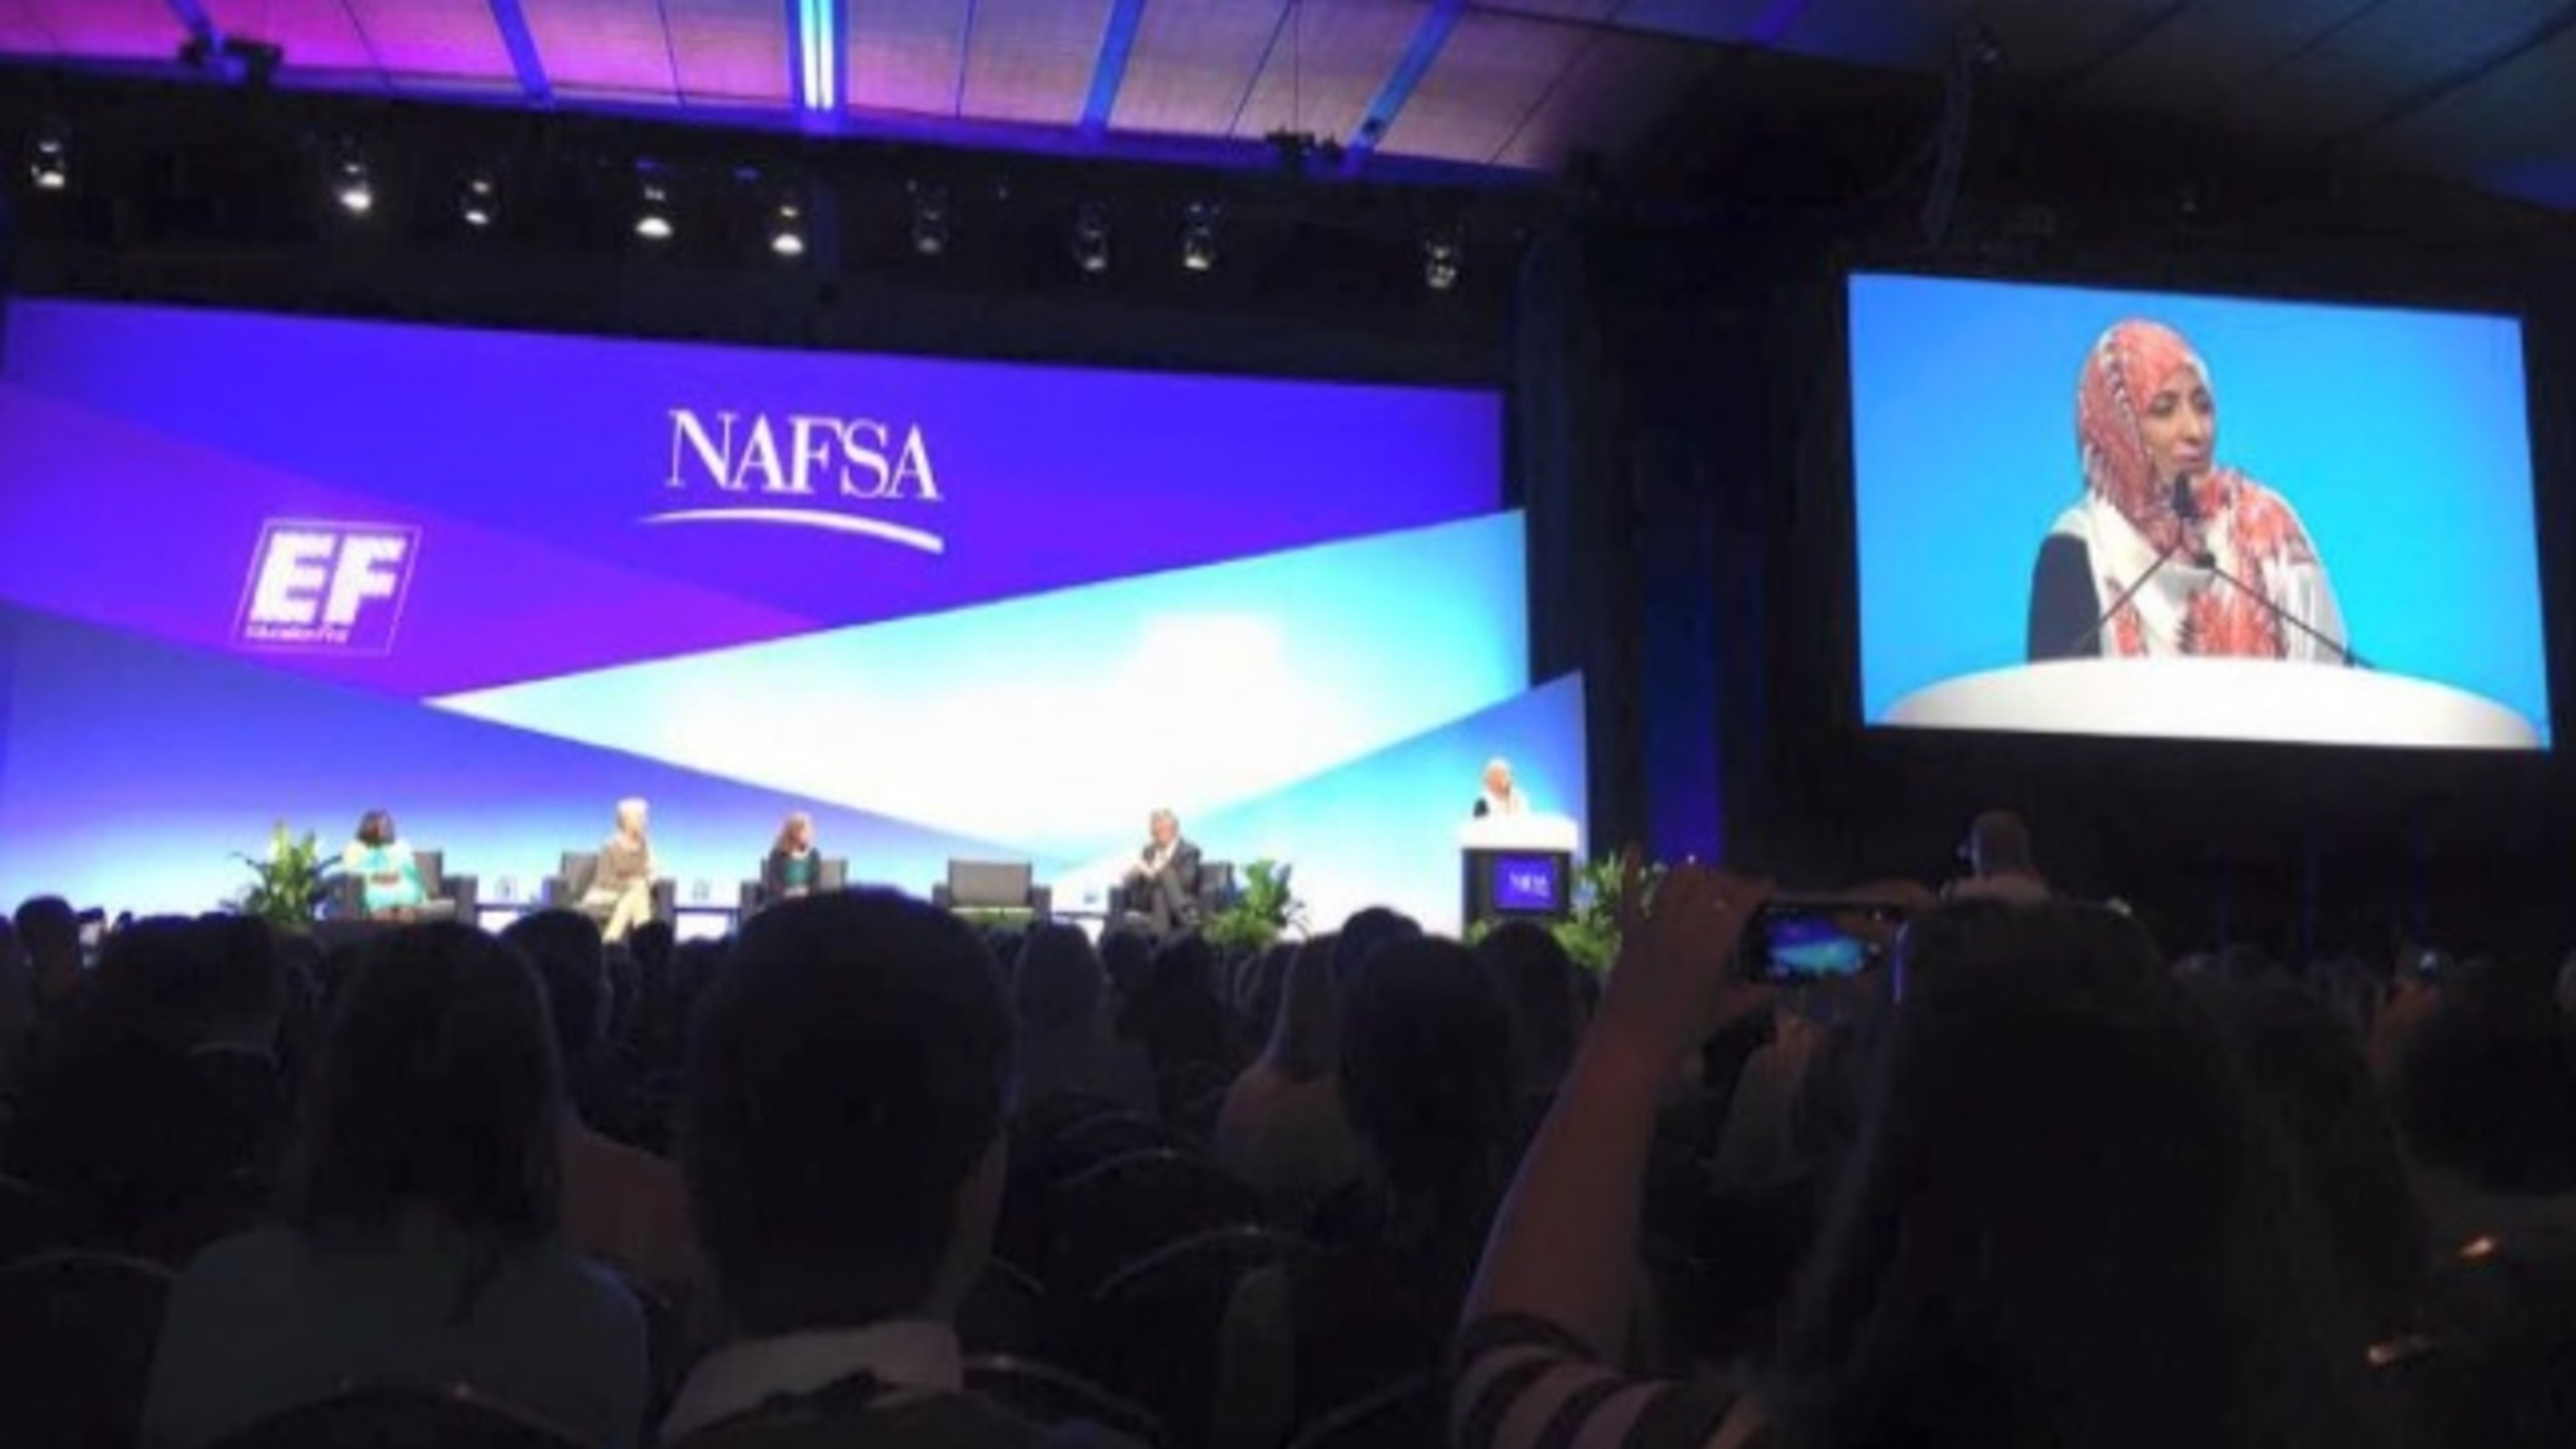 Tawakkol Karman to Speach at NAFSA 2015 International Education Conference in Boston